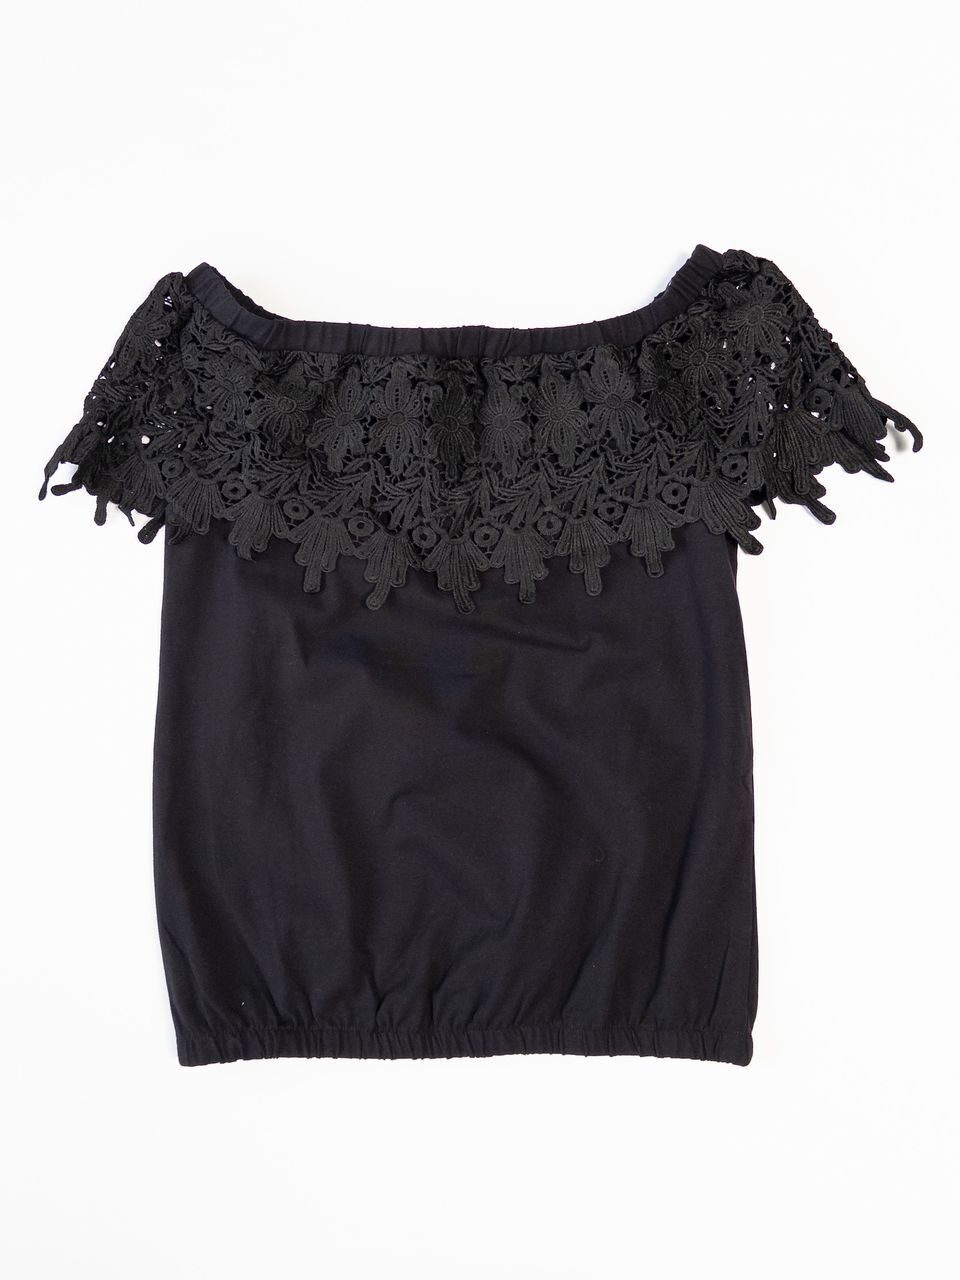 Блуза цвет чёрный с кружевной вышивкой  размер  UK 10 (rus 44-46) BY VERY